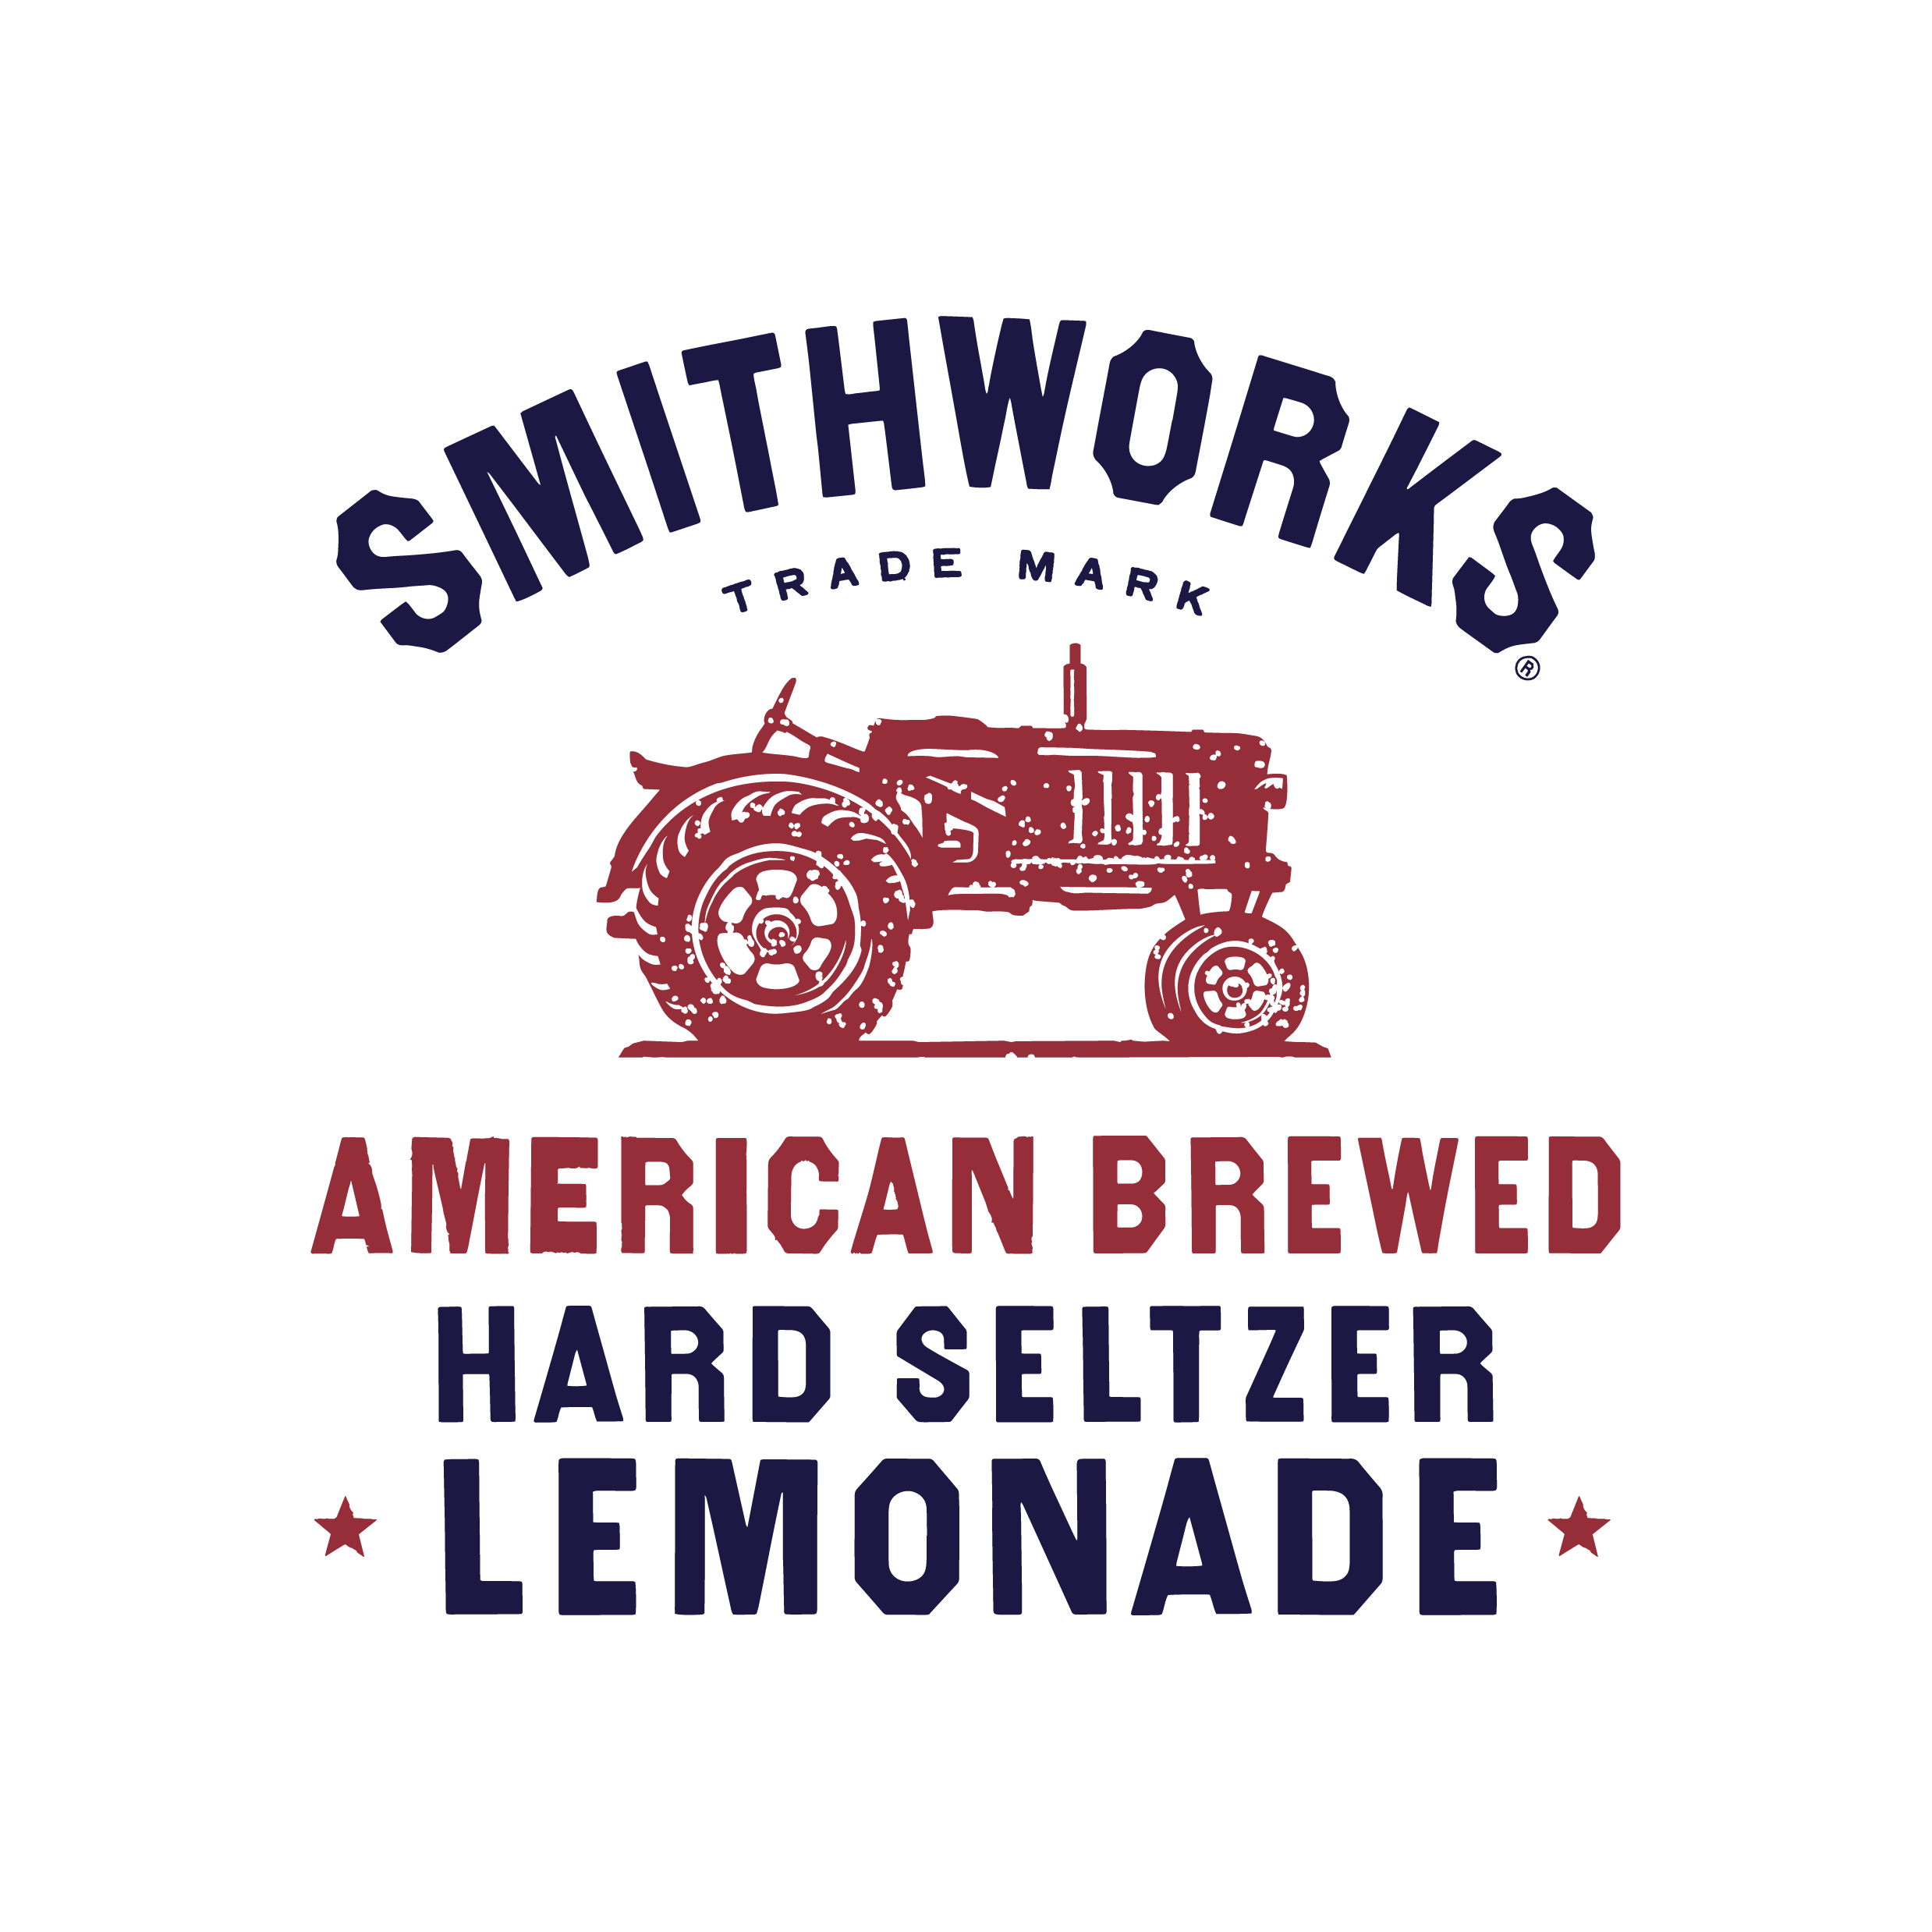 Simithworks Hard Seltzer Lemonade logo